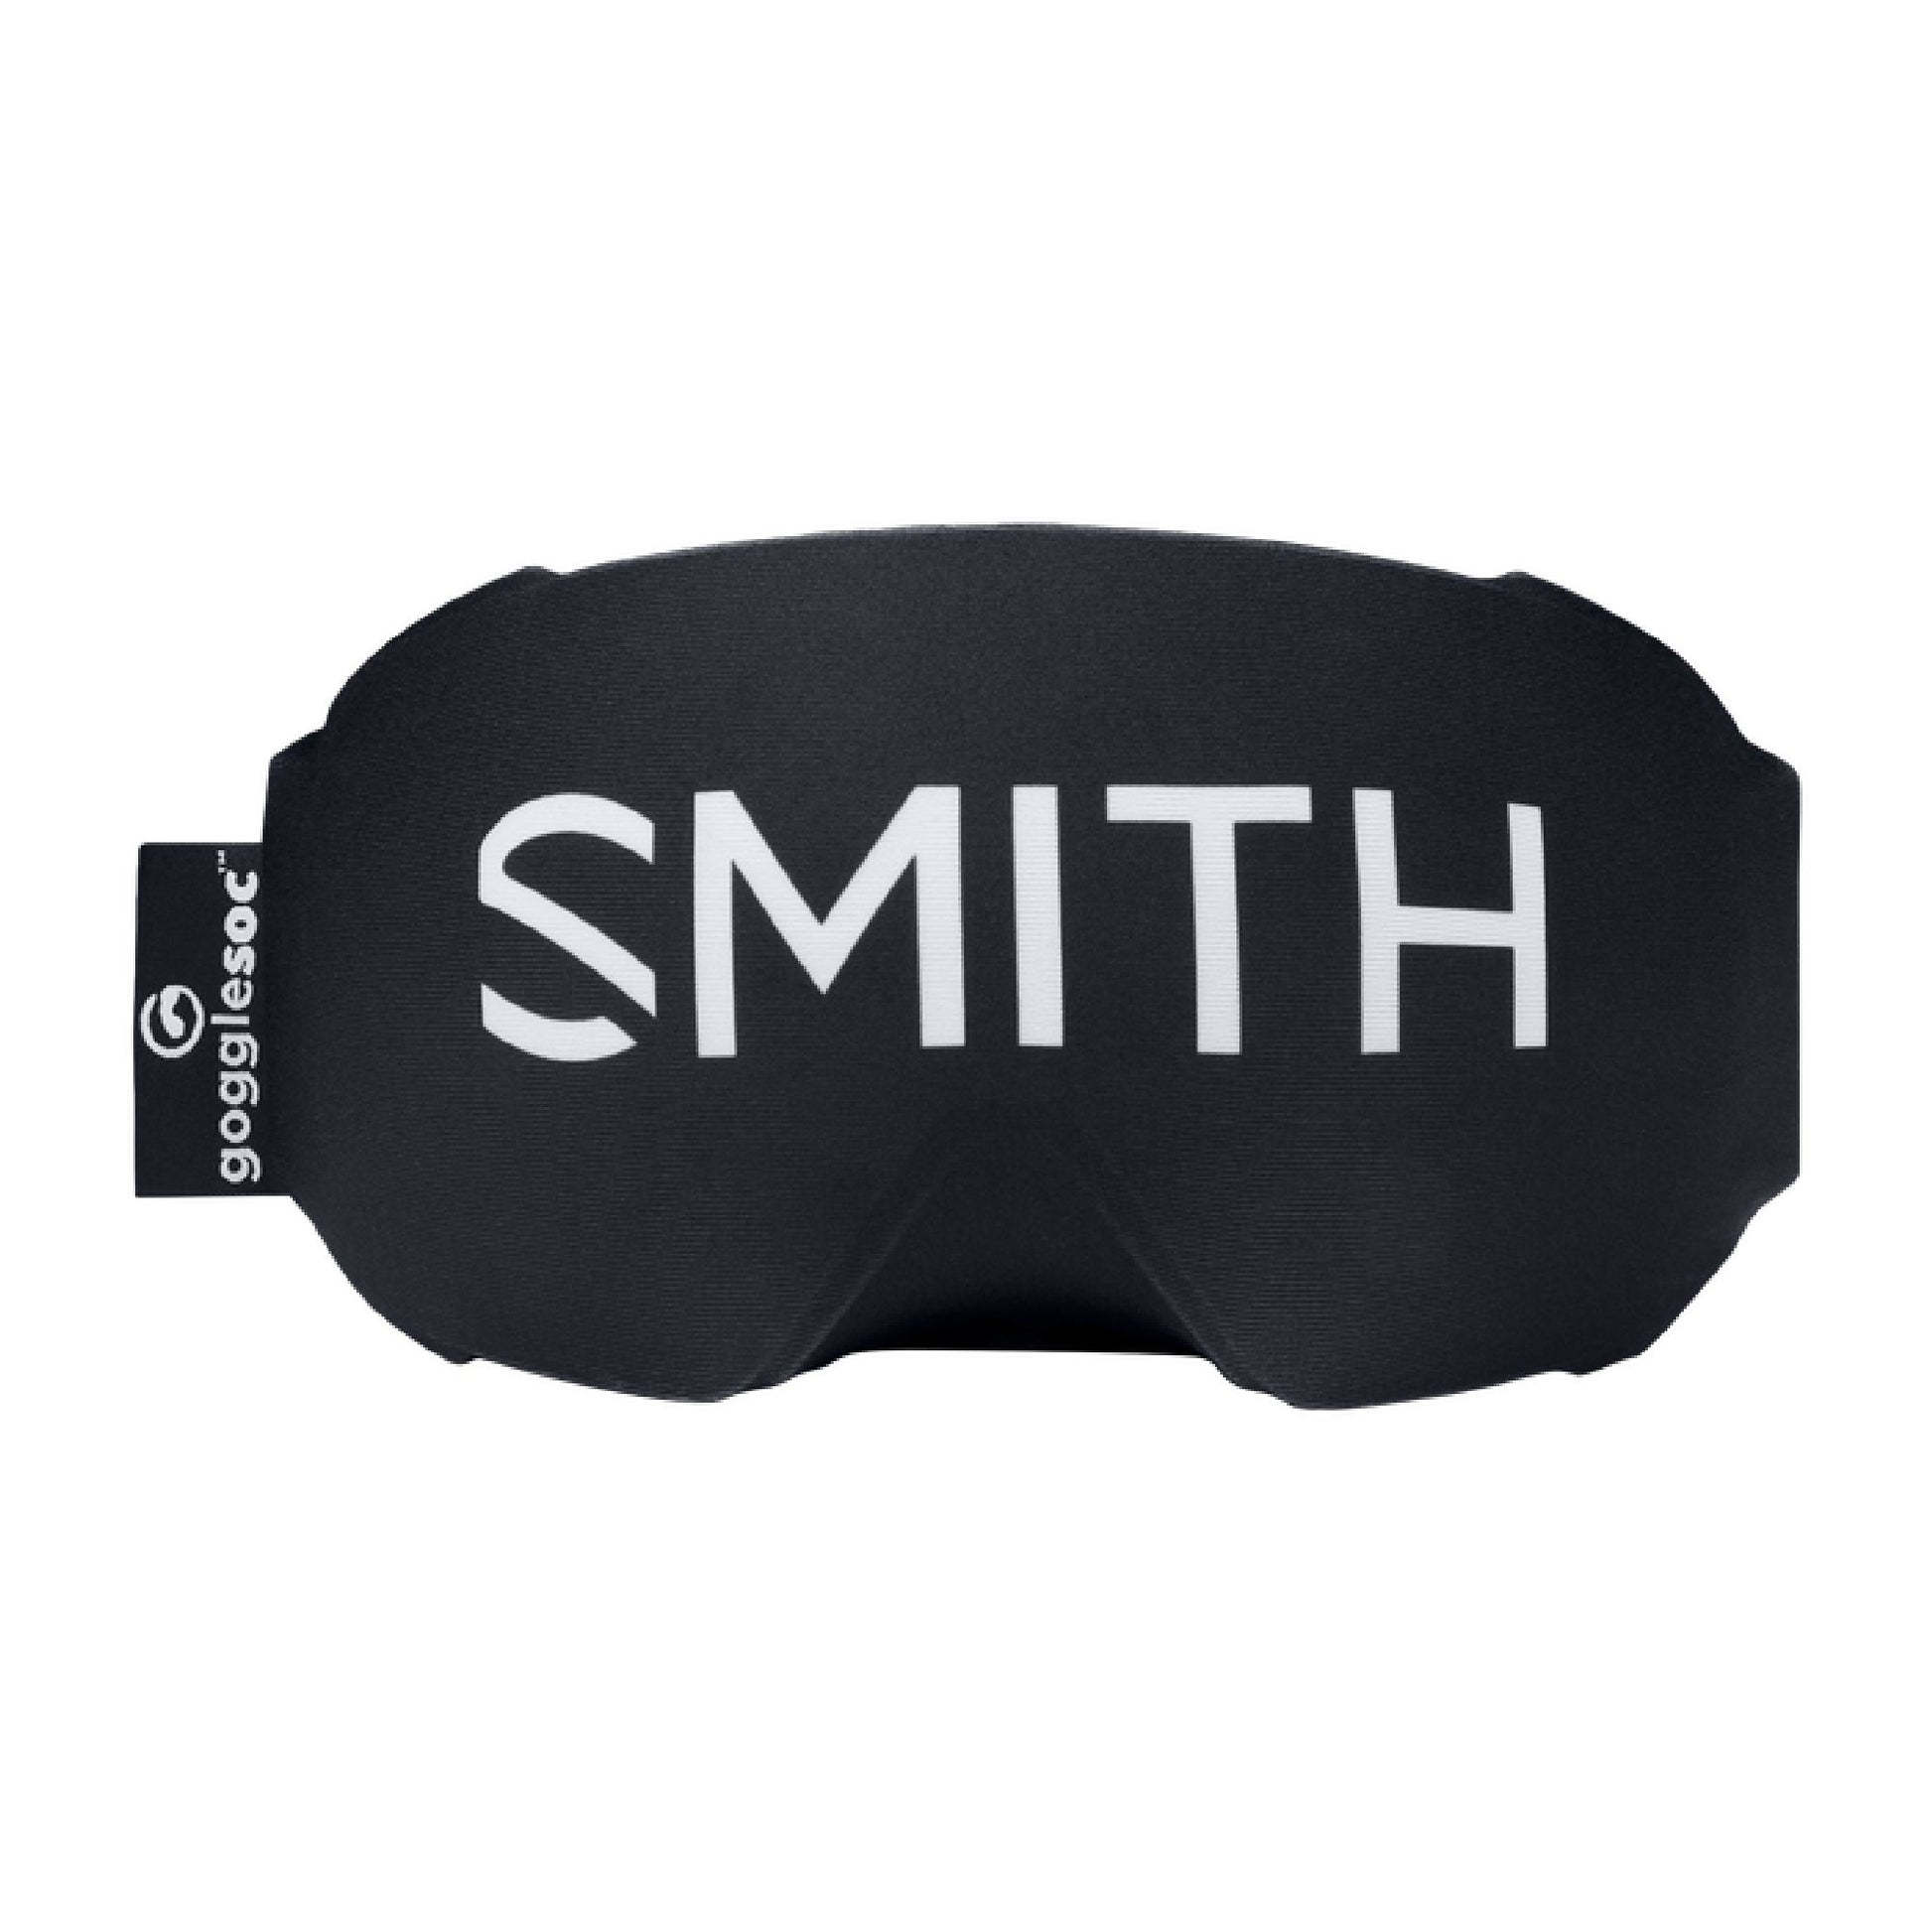 Smith 4D MAG S Snow Goggle White Vapor / ChromaPop Sun Platinum Mirror Snow Goggles